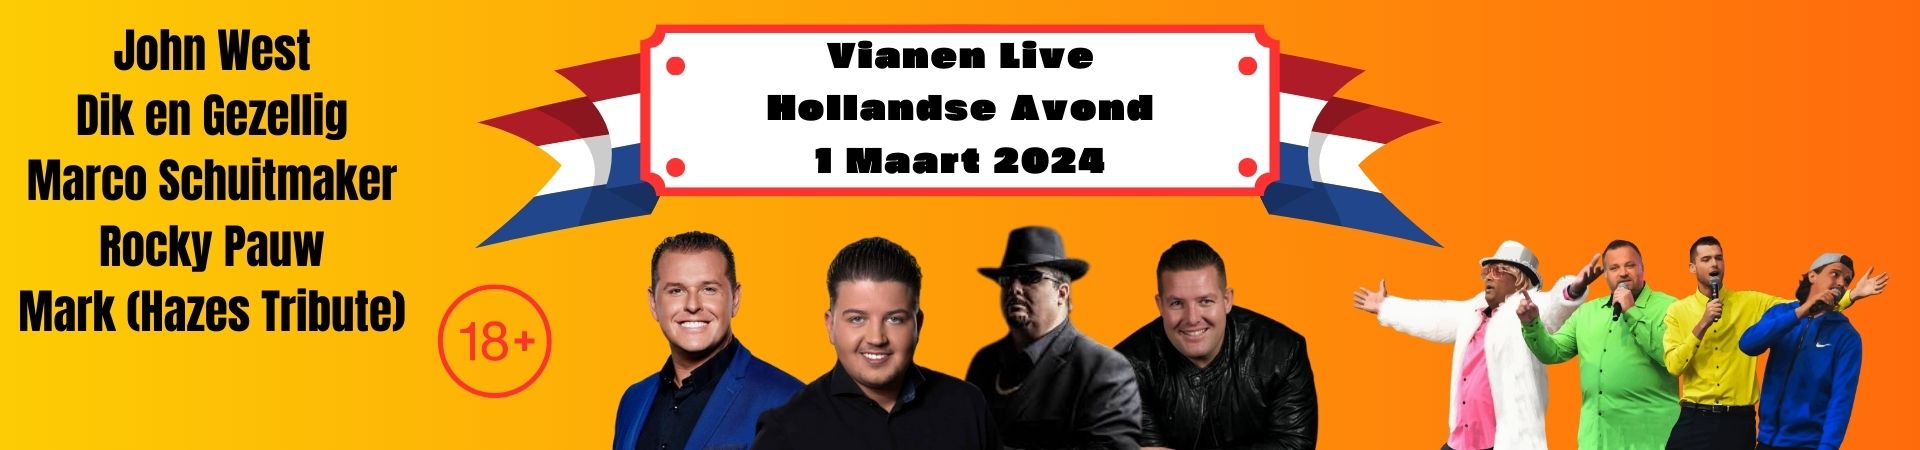 Vianen Live Tickets 2024